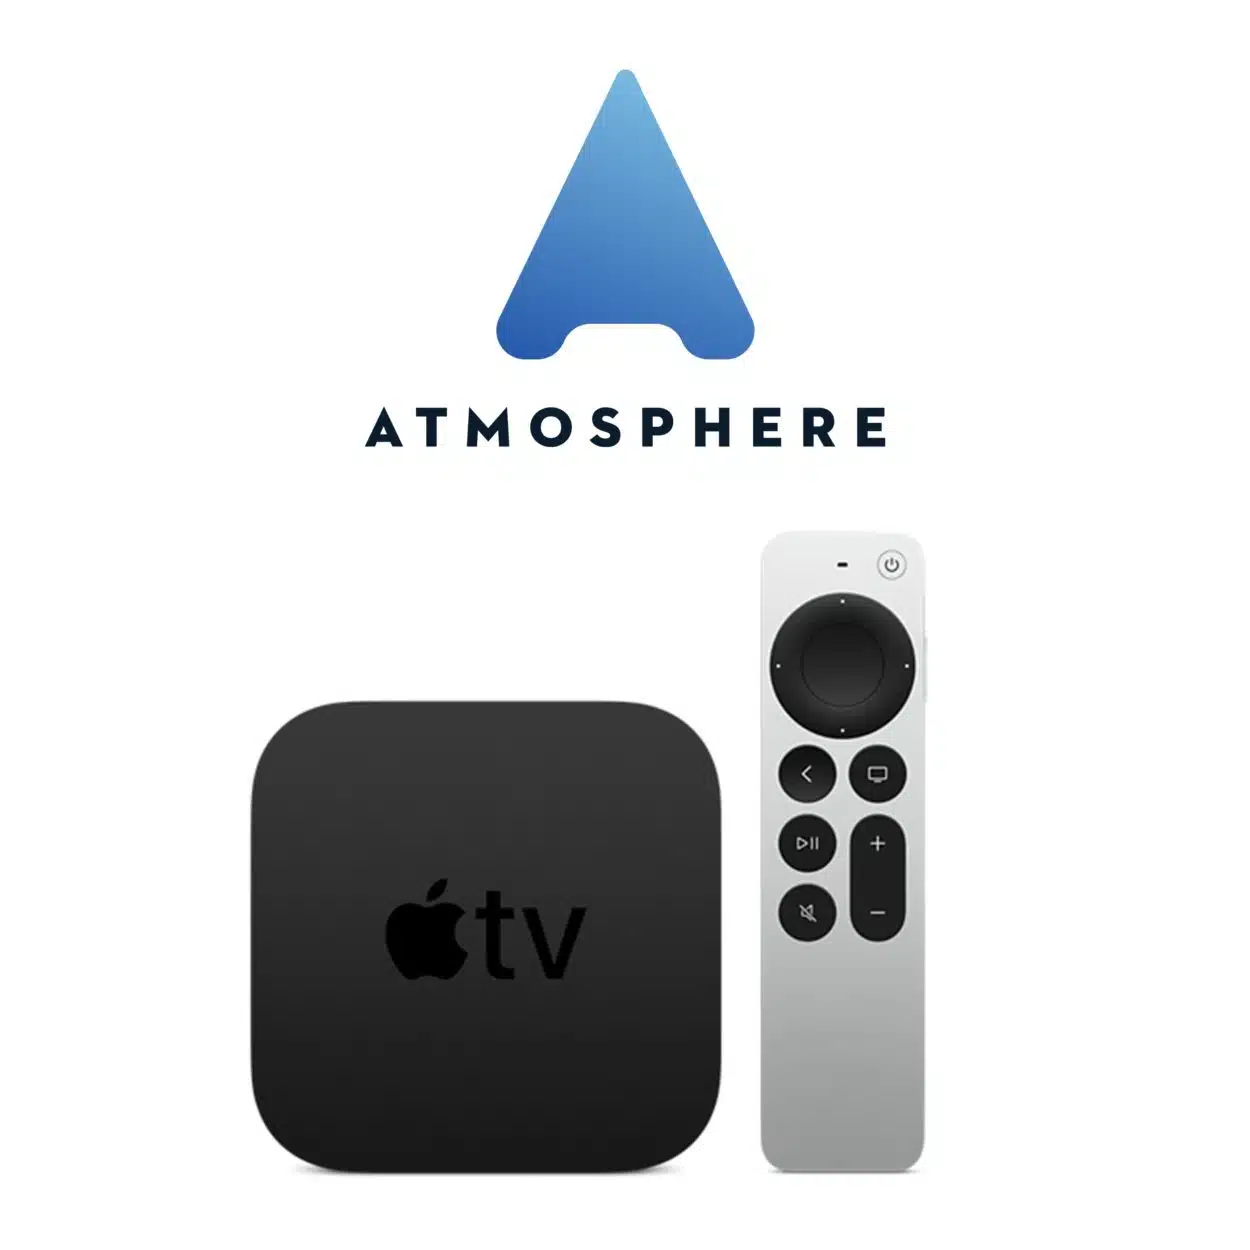 Atmosphere TV - Better TV For Business - Business Advertising TV